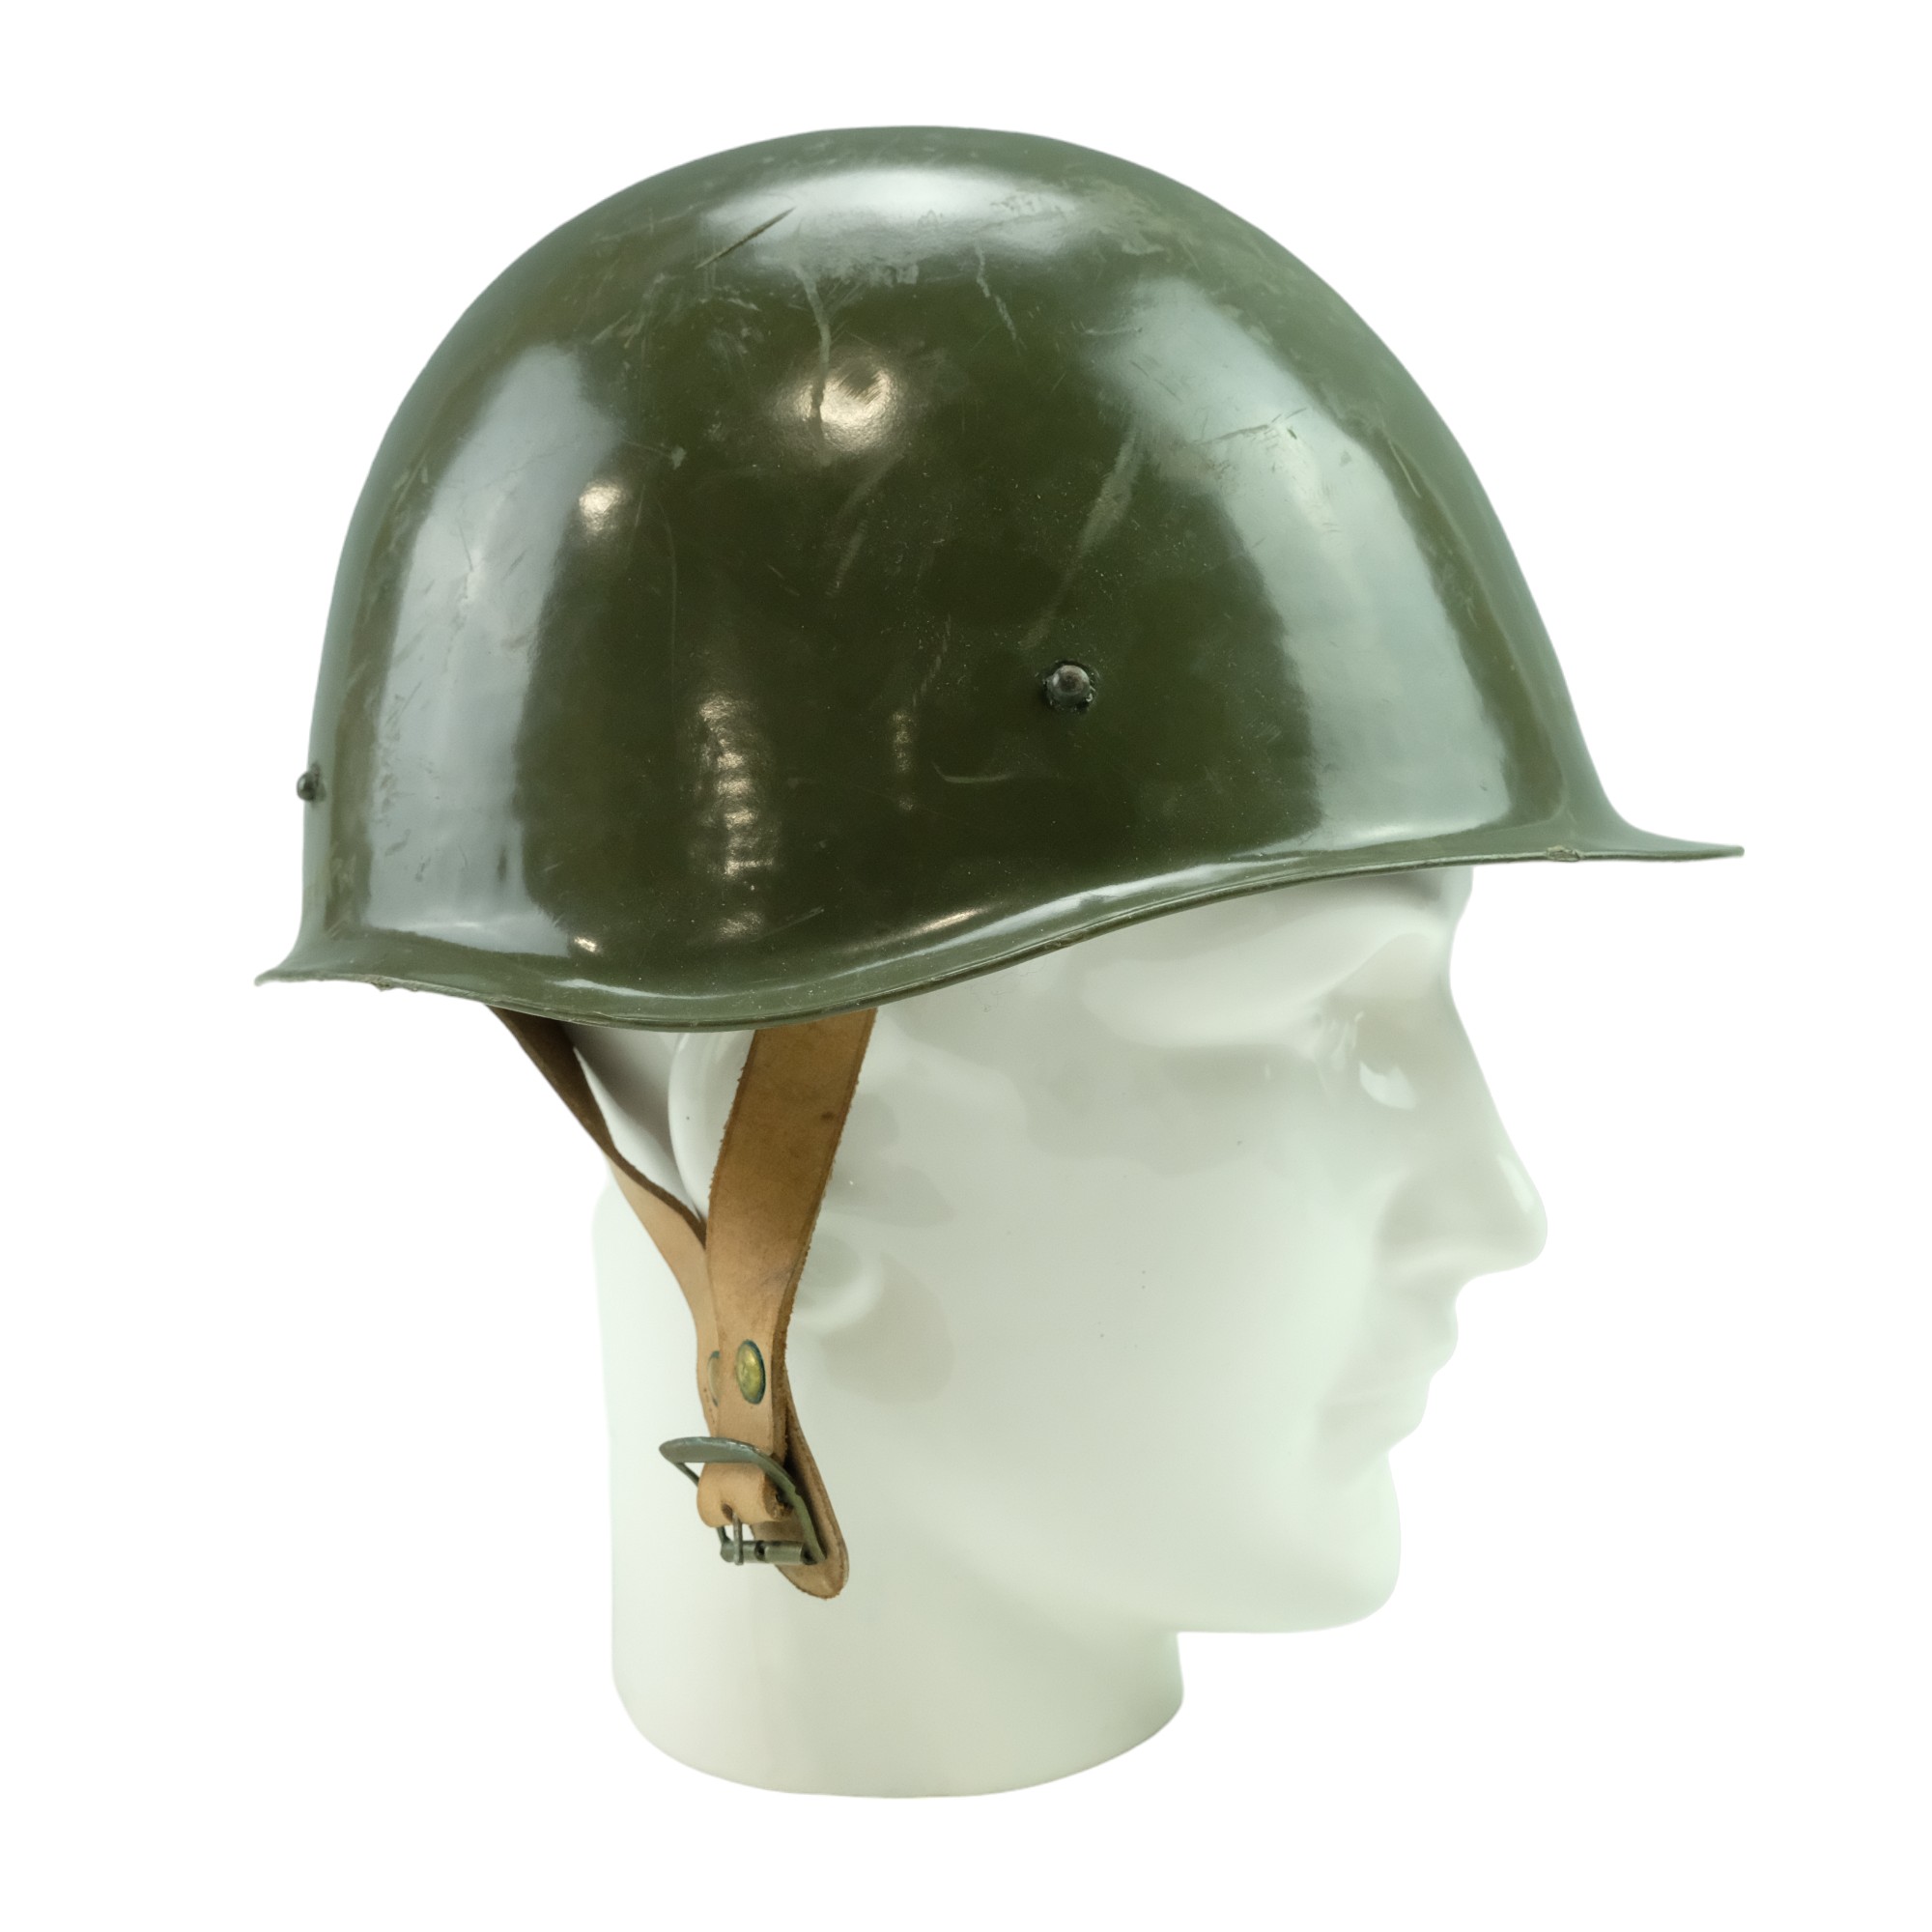 A Hungarian Ssh40 helmet - Image 5 of 6